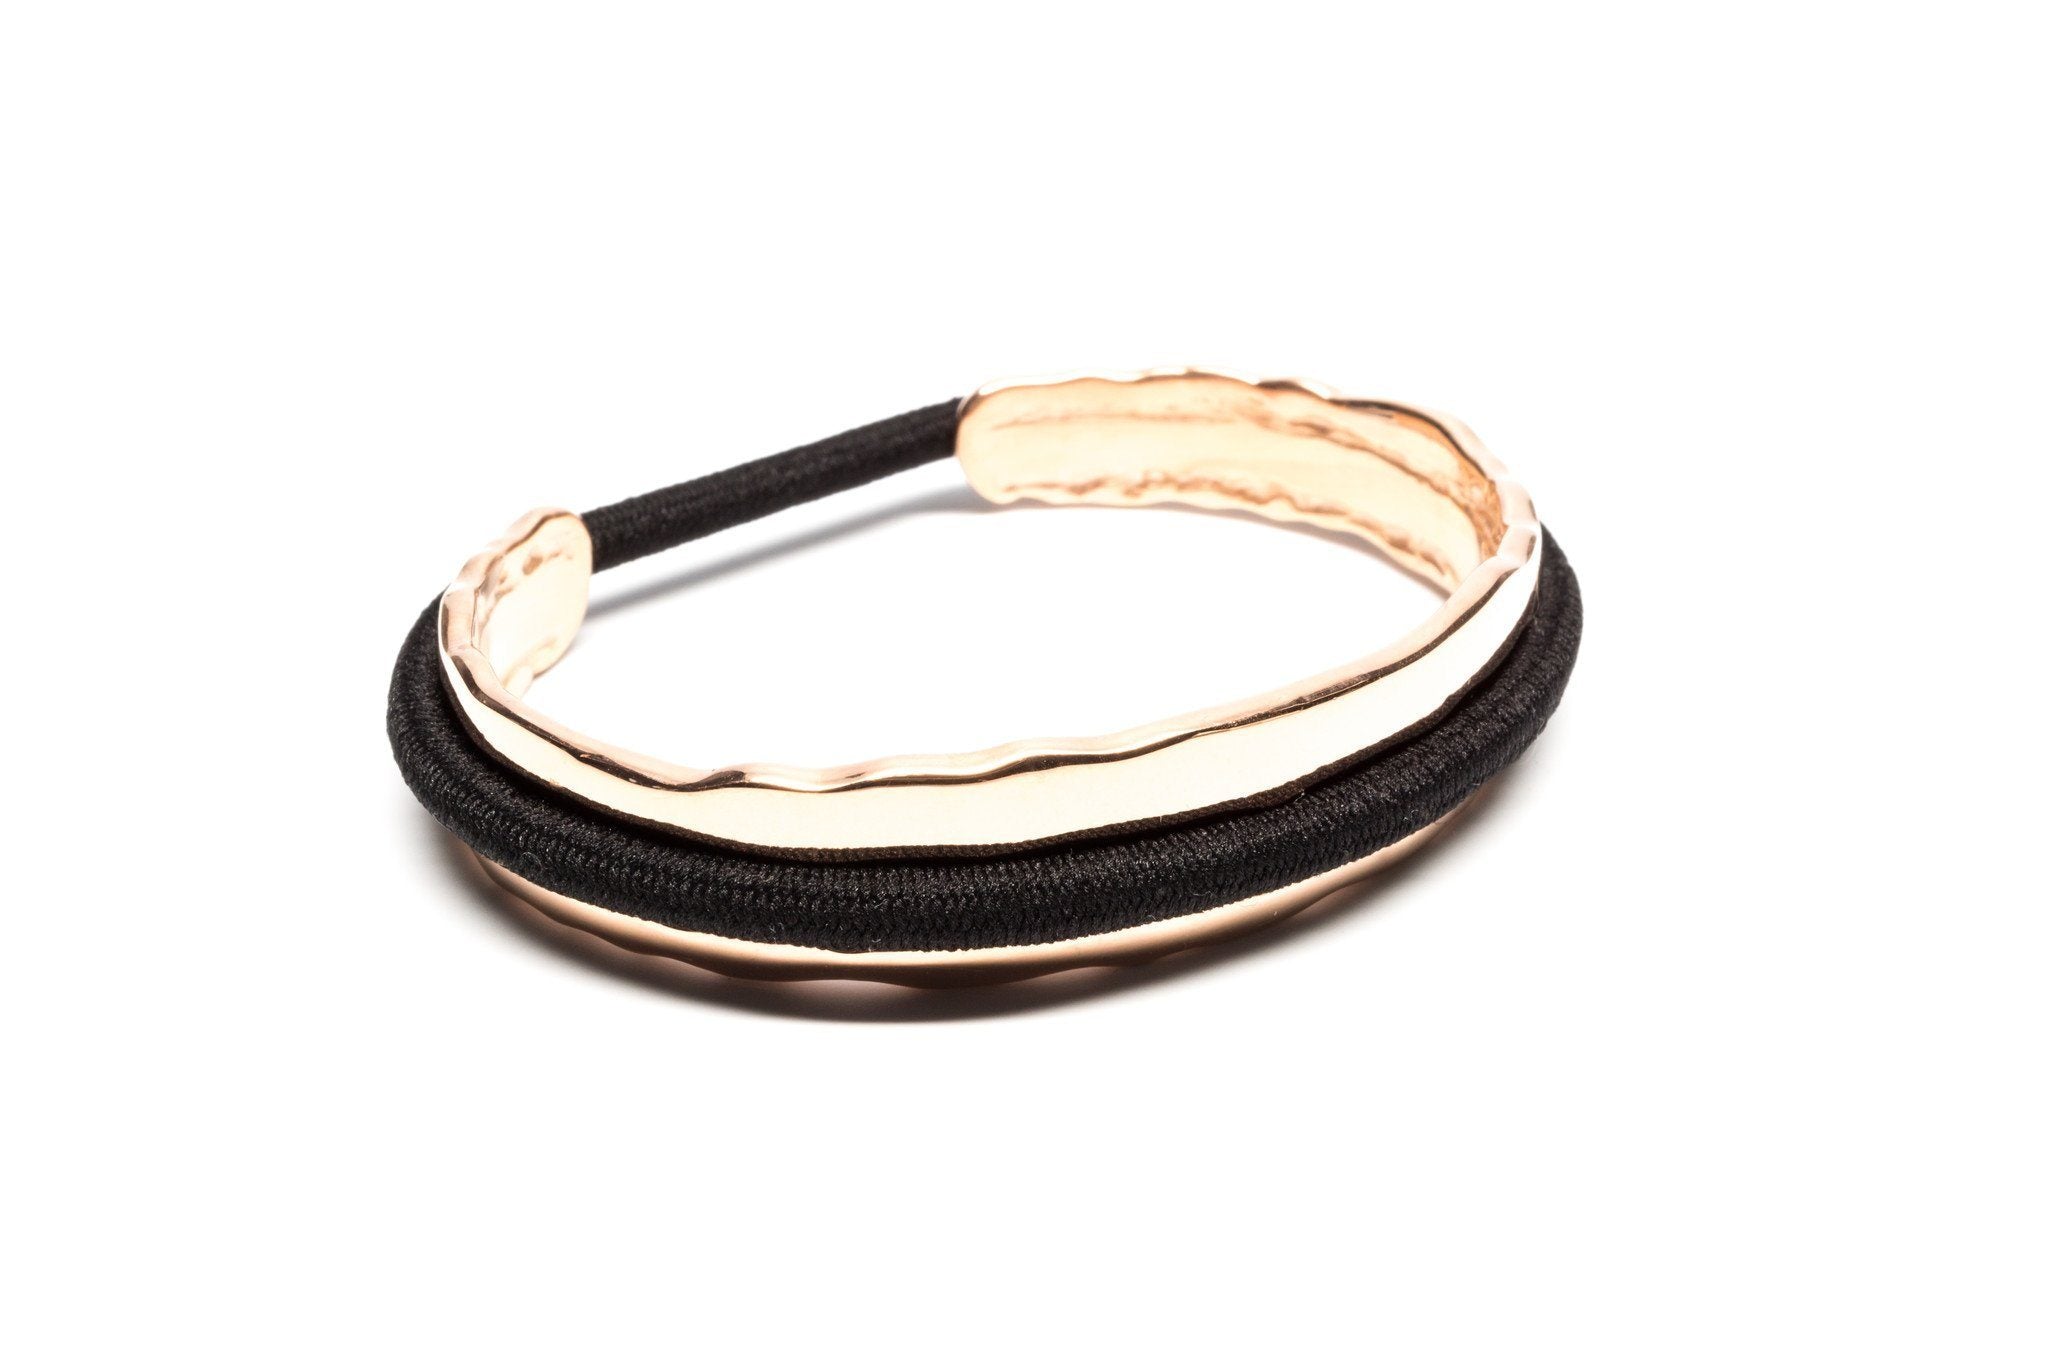 The original hair tie bracelet holder by maria shireen – Maria